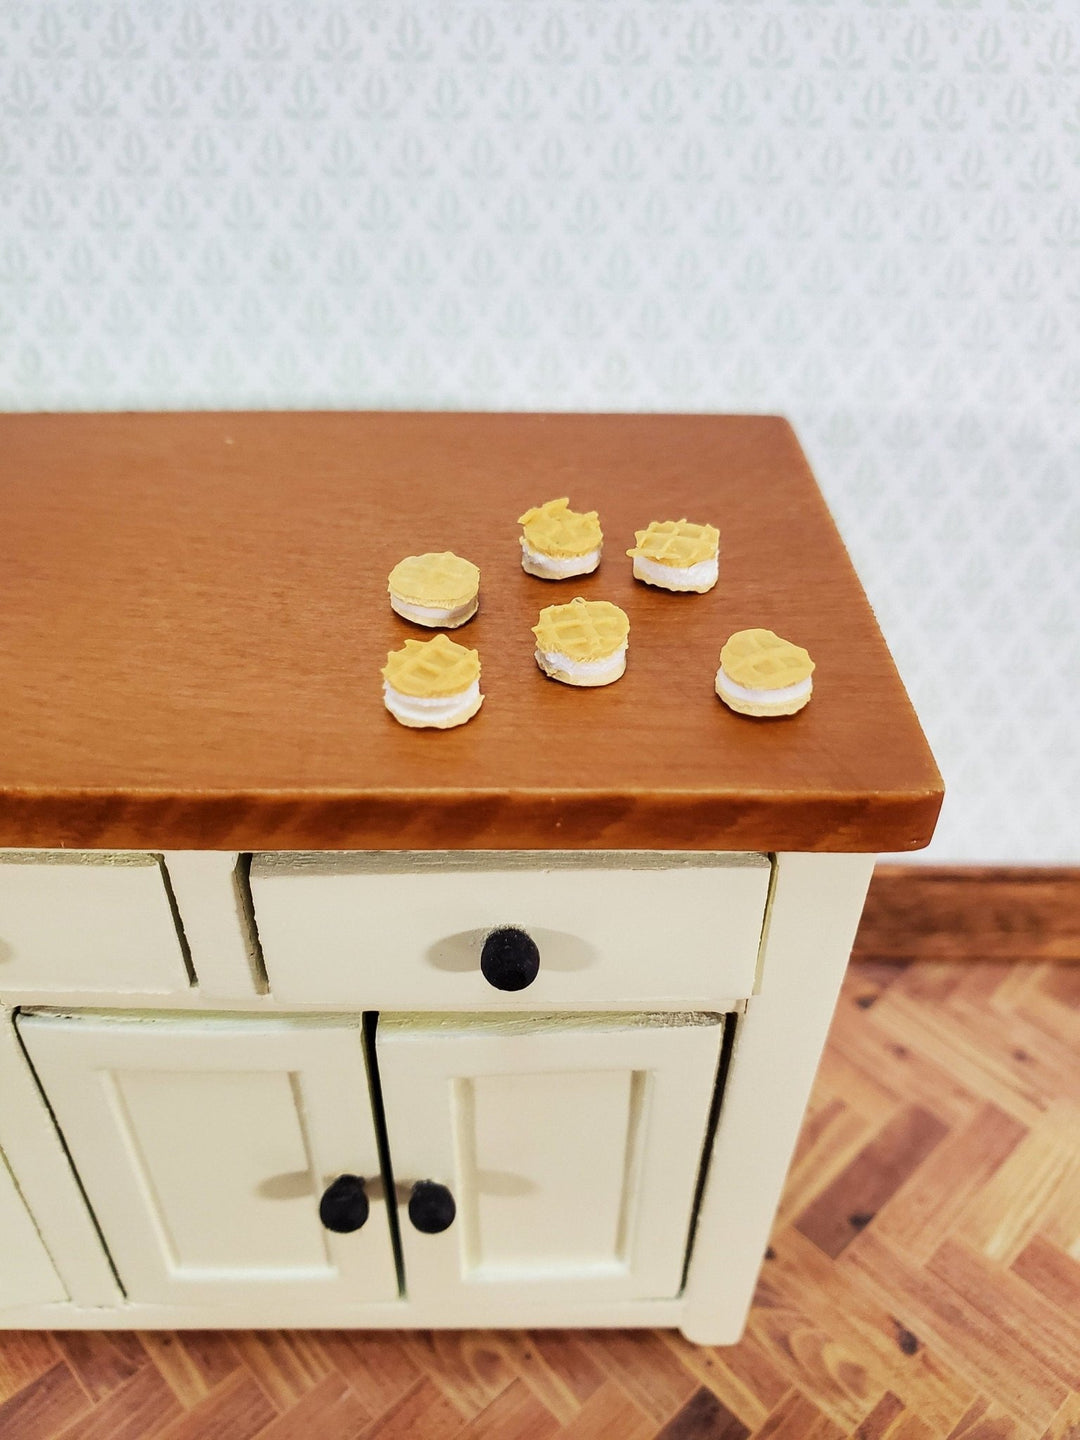 Dollhouse Cookies Waffle Sandwich Style Dessert 1:12 Scale Miniature Food 6 Pieces - Miniature Crush